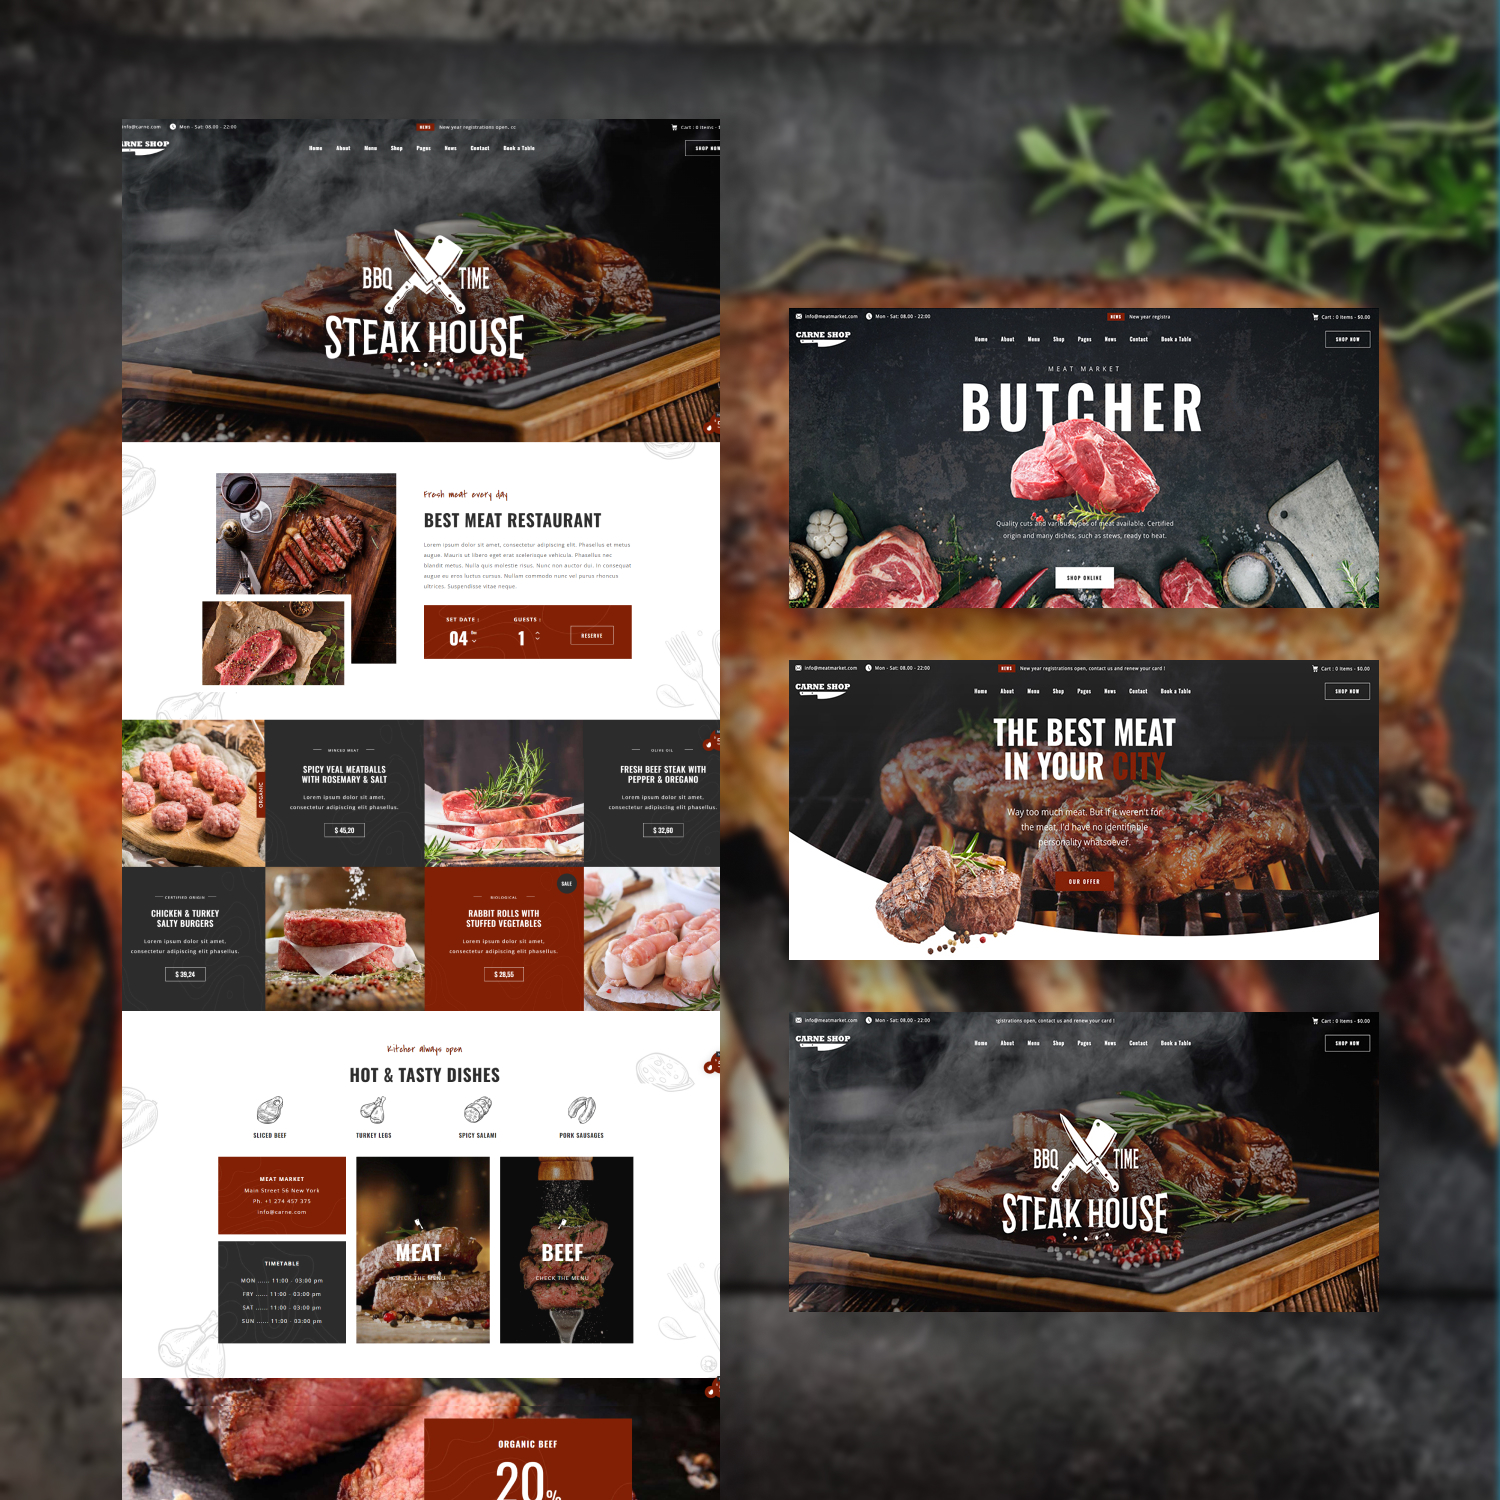 Preview carne butcher meat restaurant.